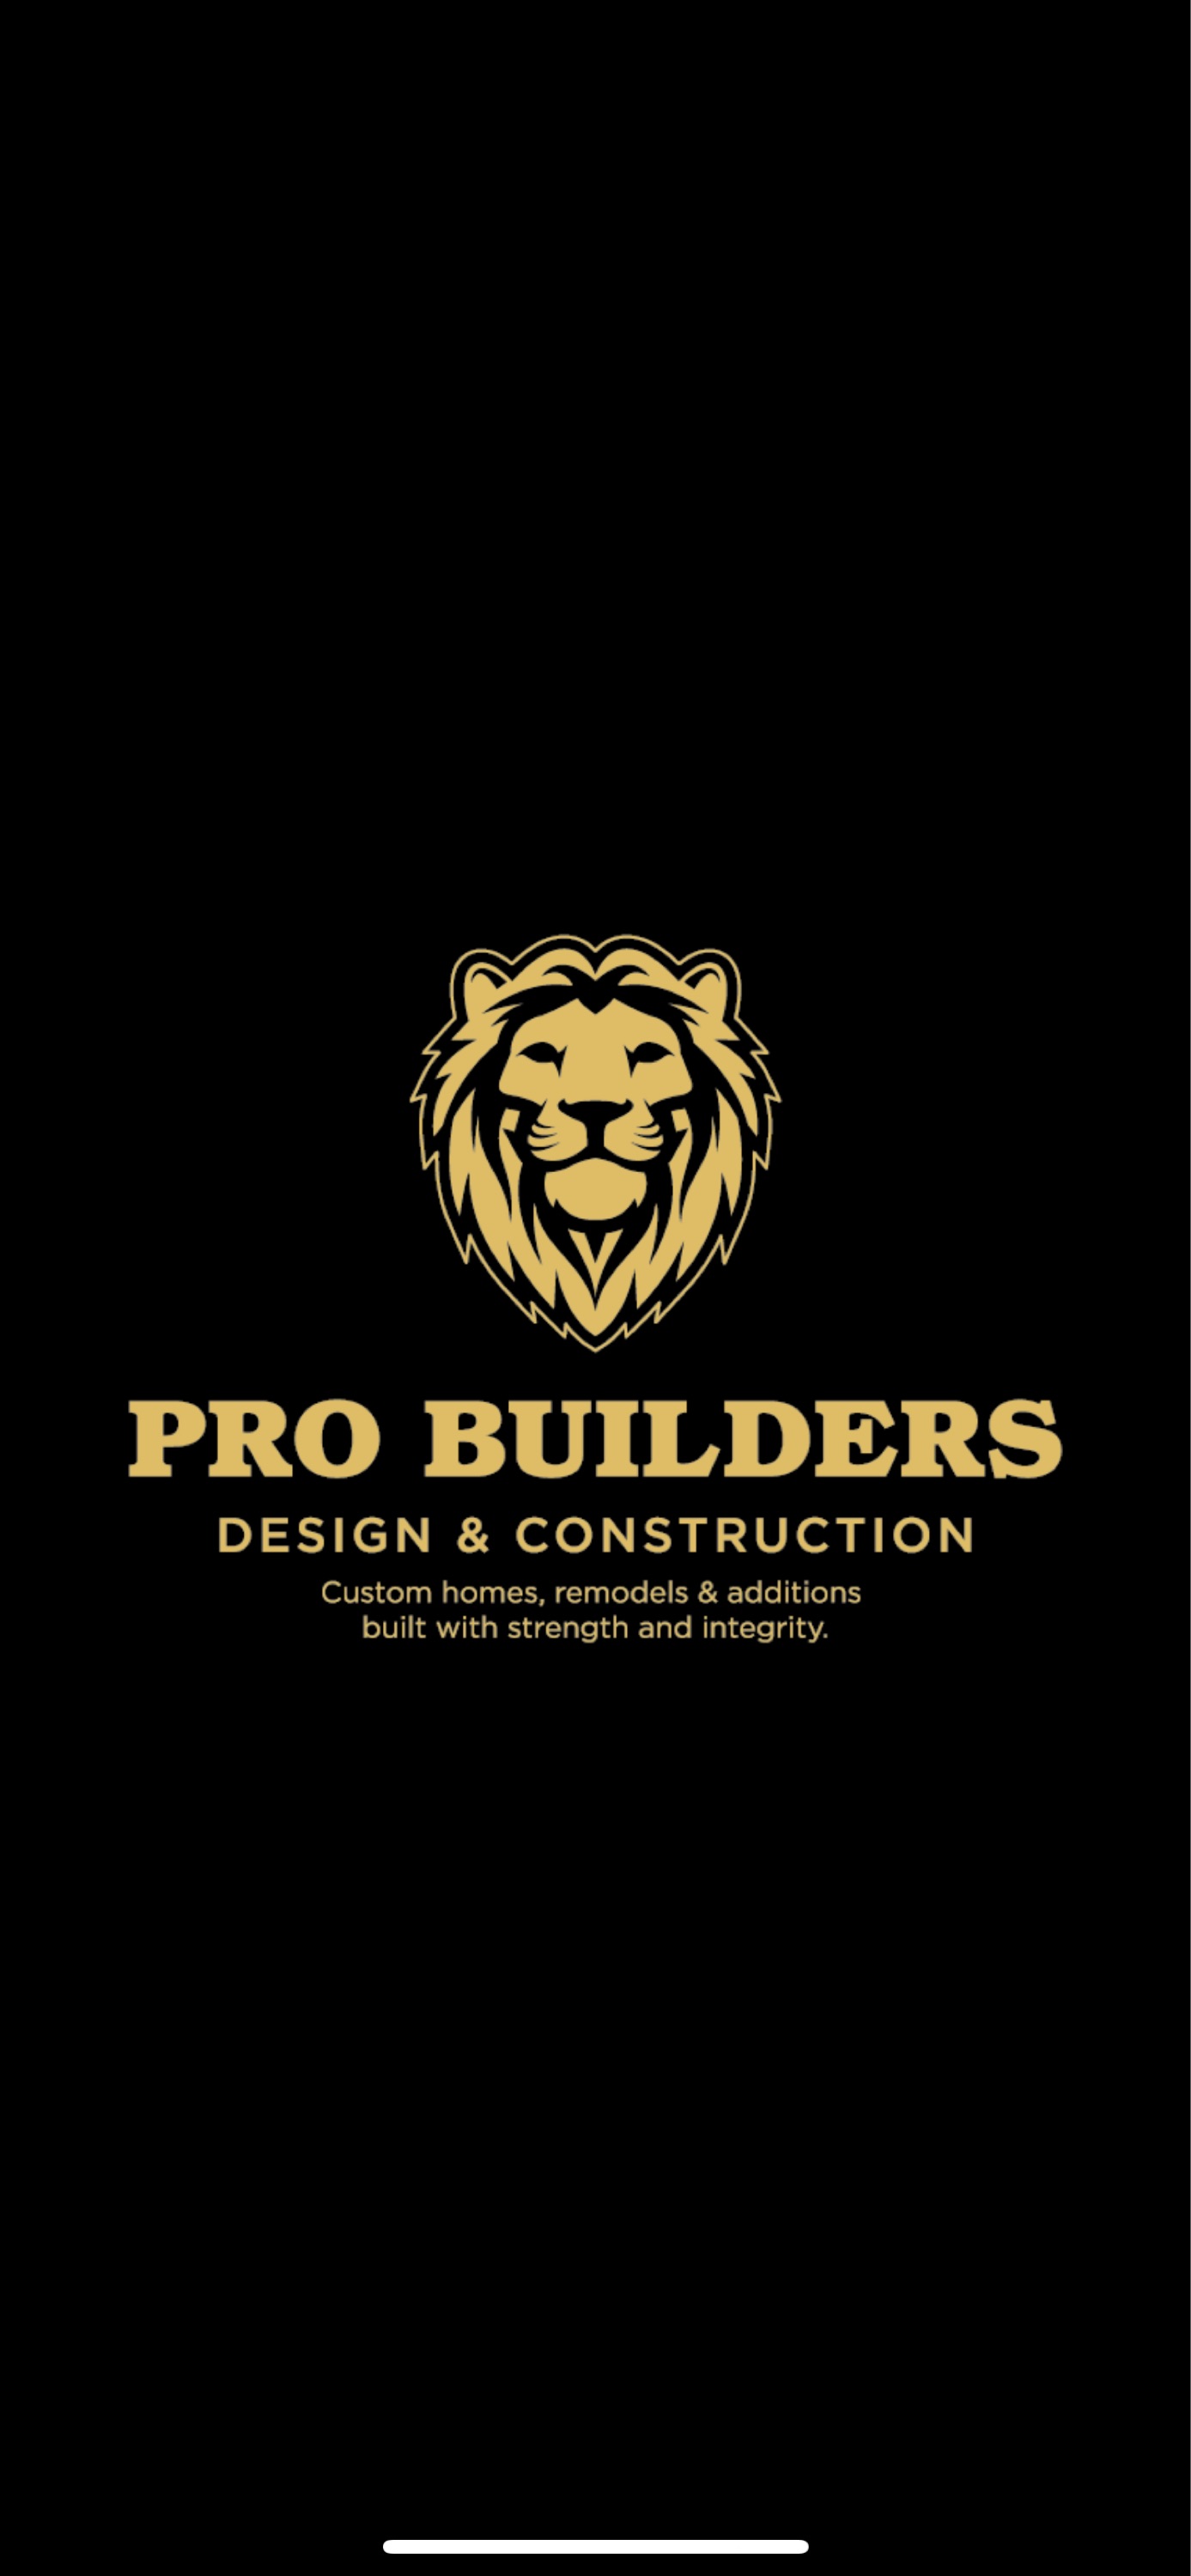 Pro Builders Design & Construction, Inc. Logo